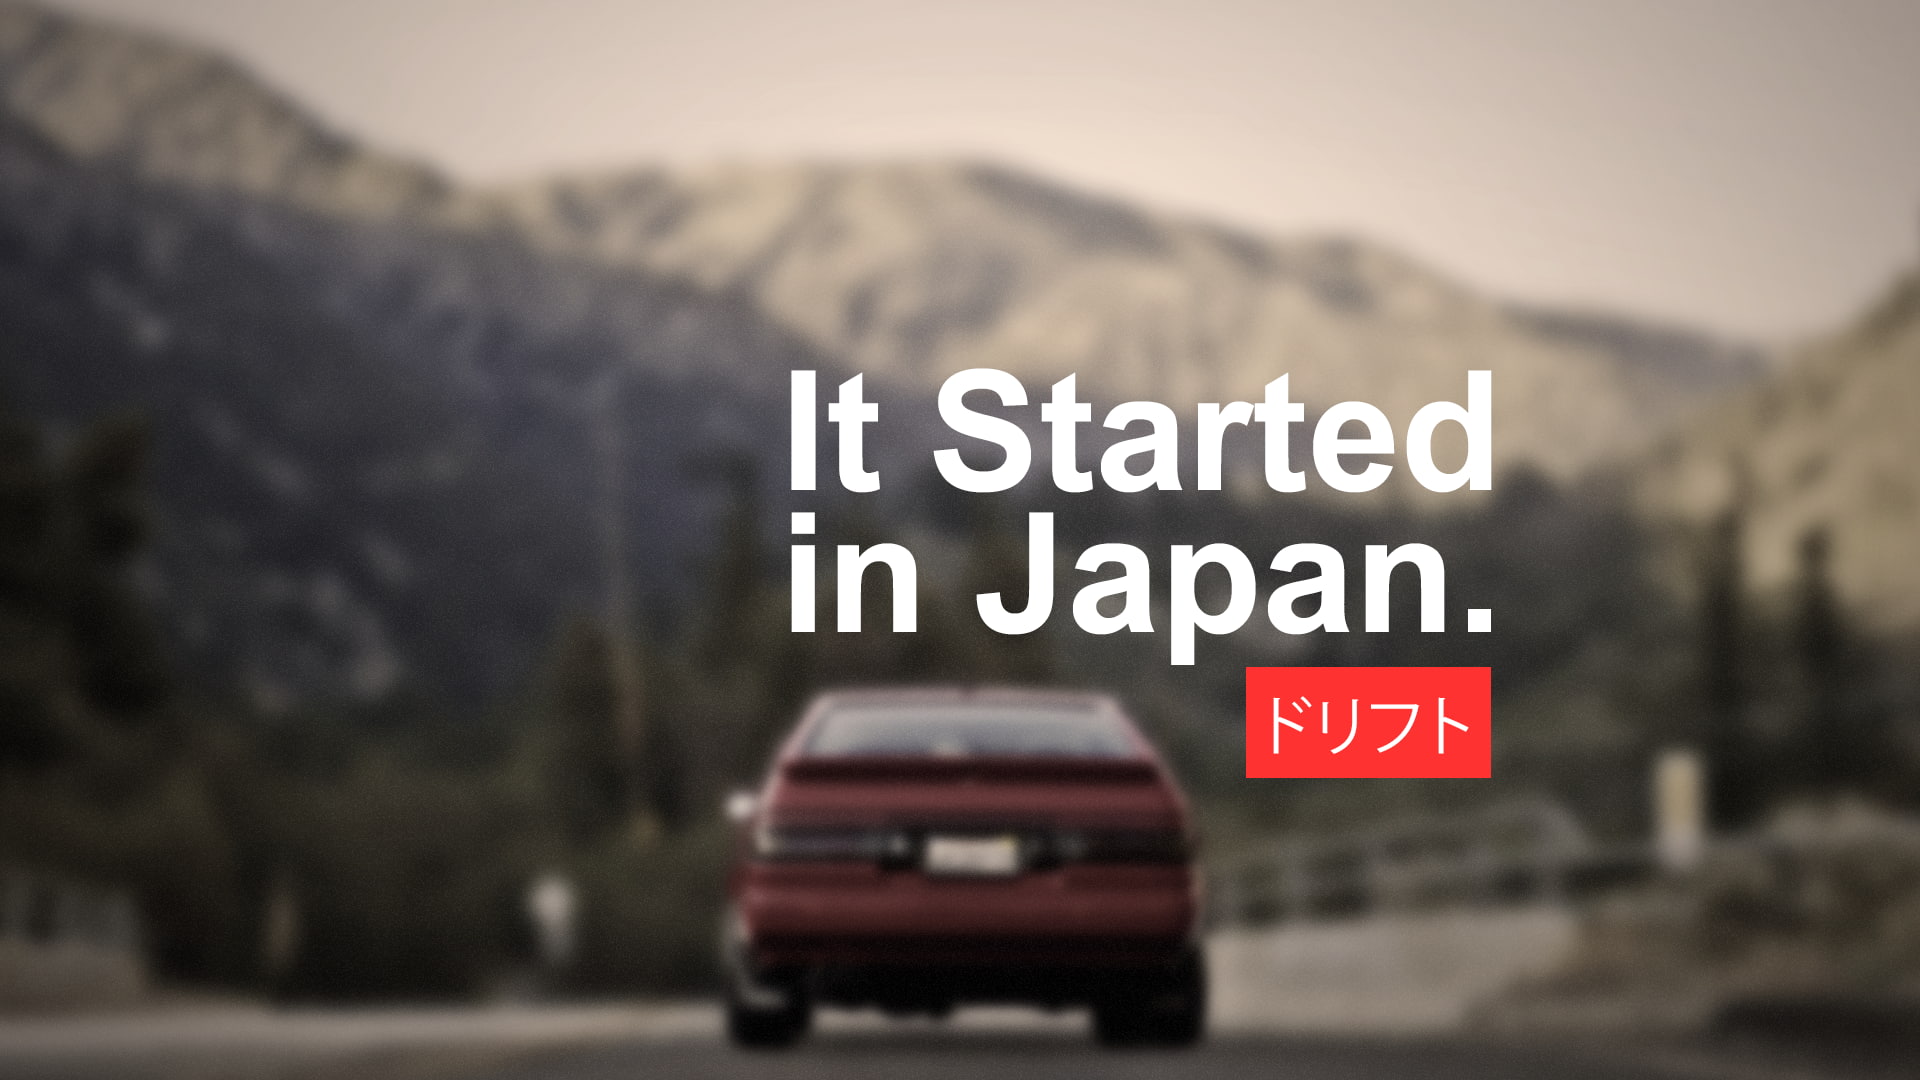 AE86, car, Drift, Drifting, Import, Initial D, Japan, Japanese Cars